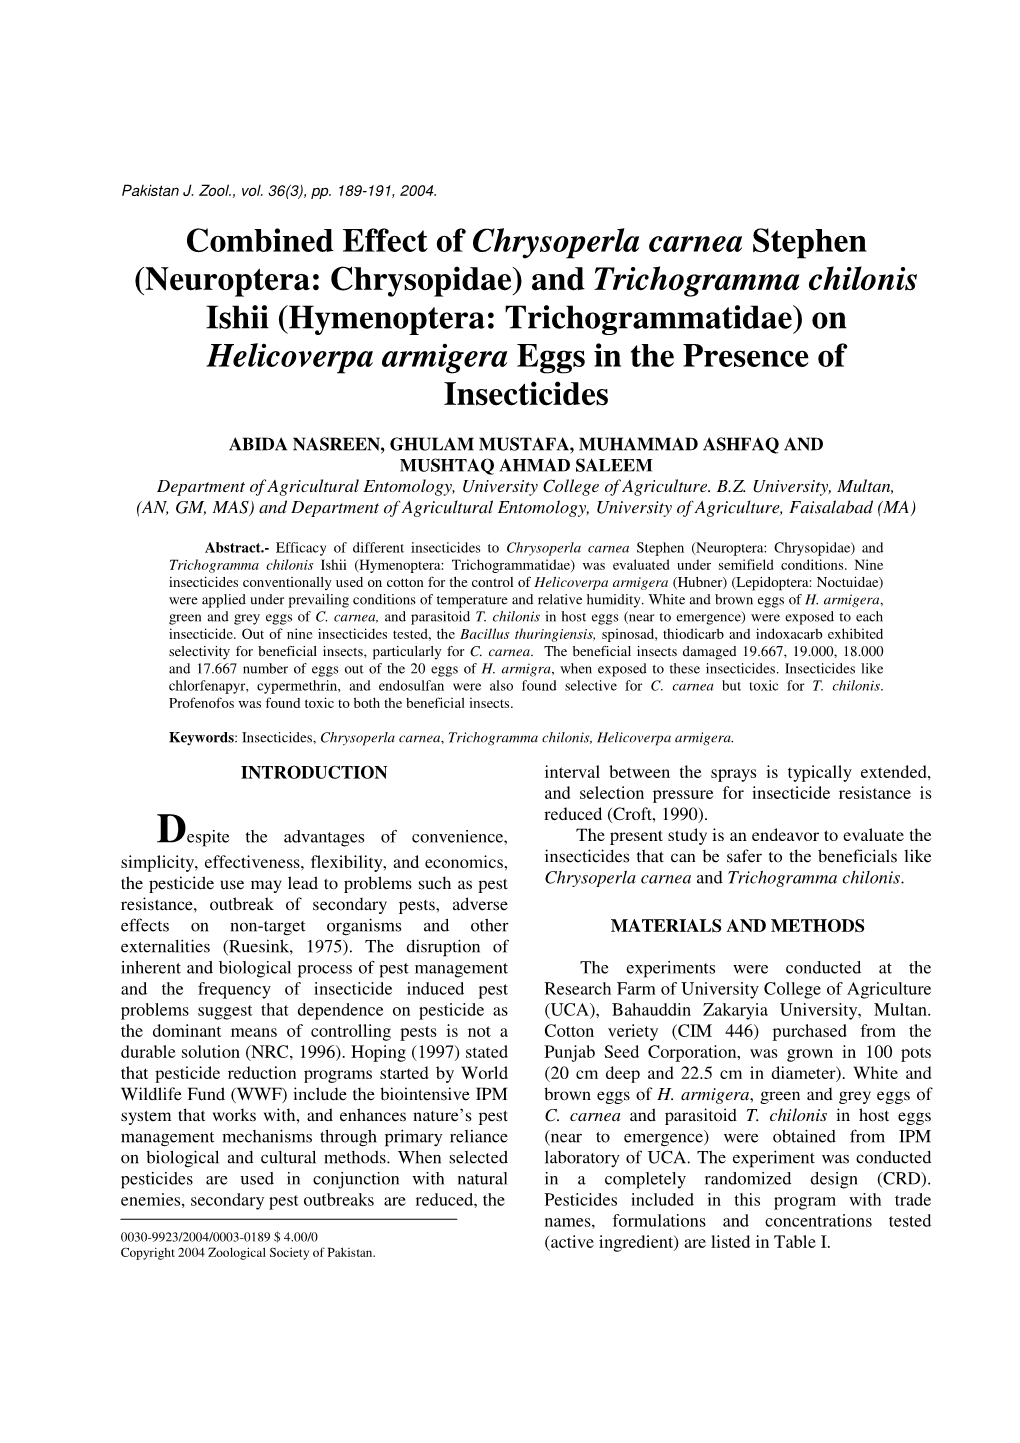 Combined Effect of Chrysoperla Carnea Stephen (Neuroptera